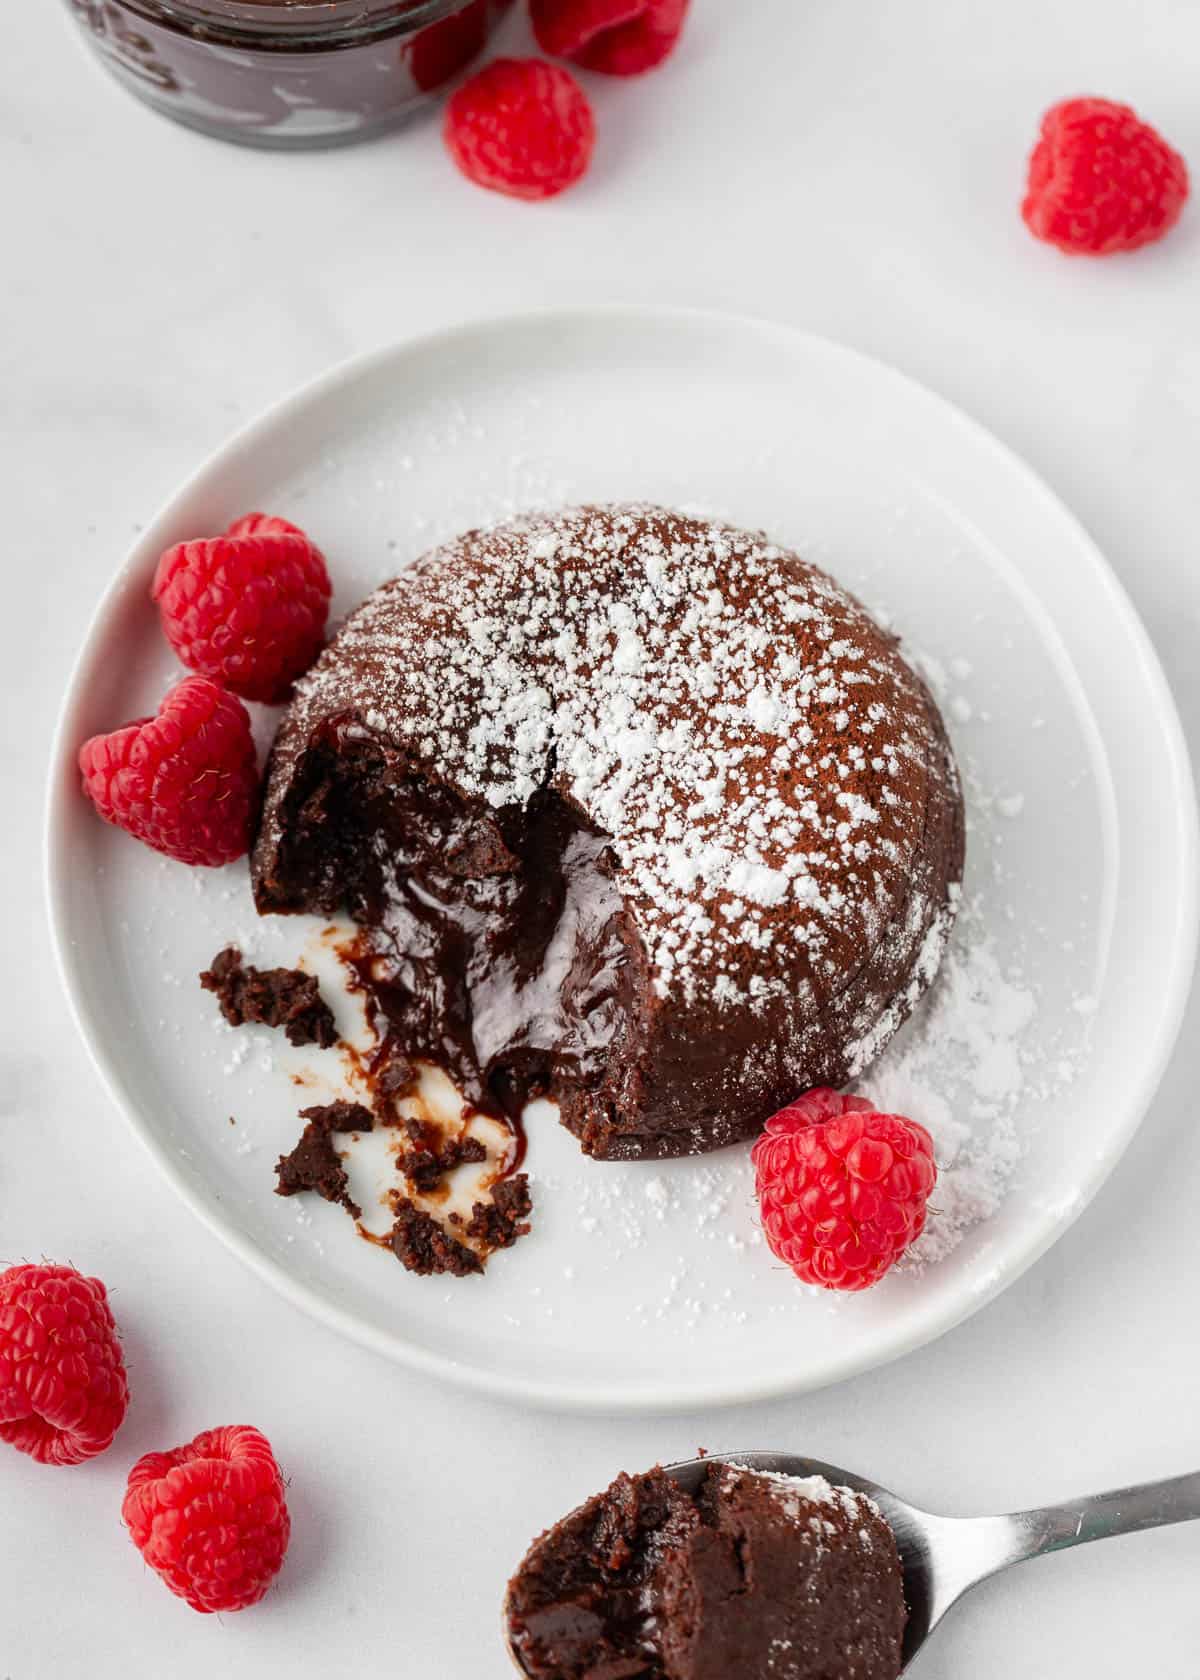 Chocolate lava cake with raspberries.